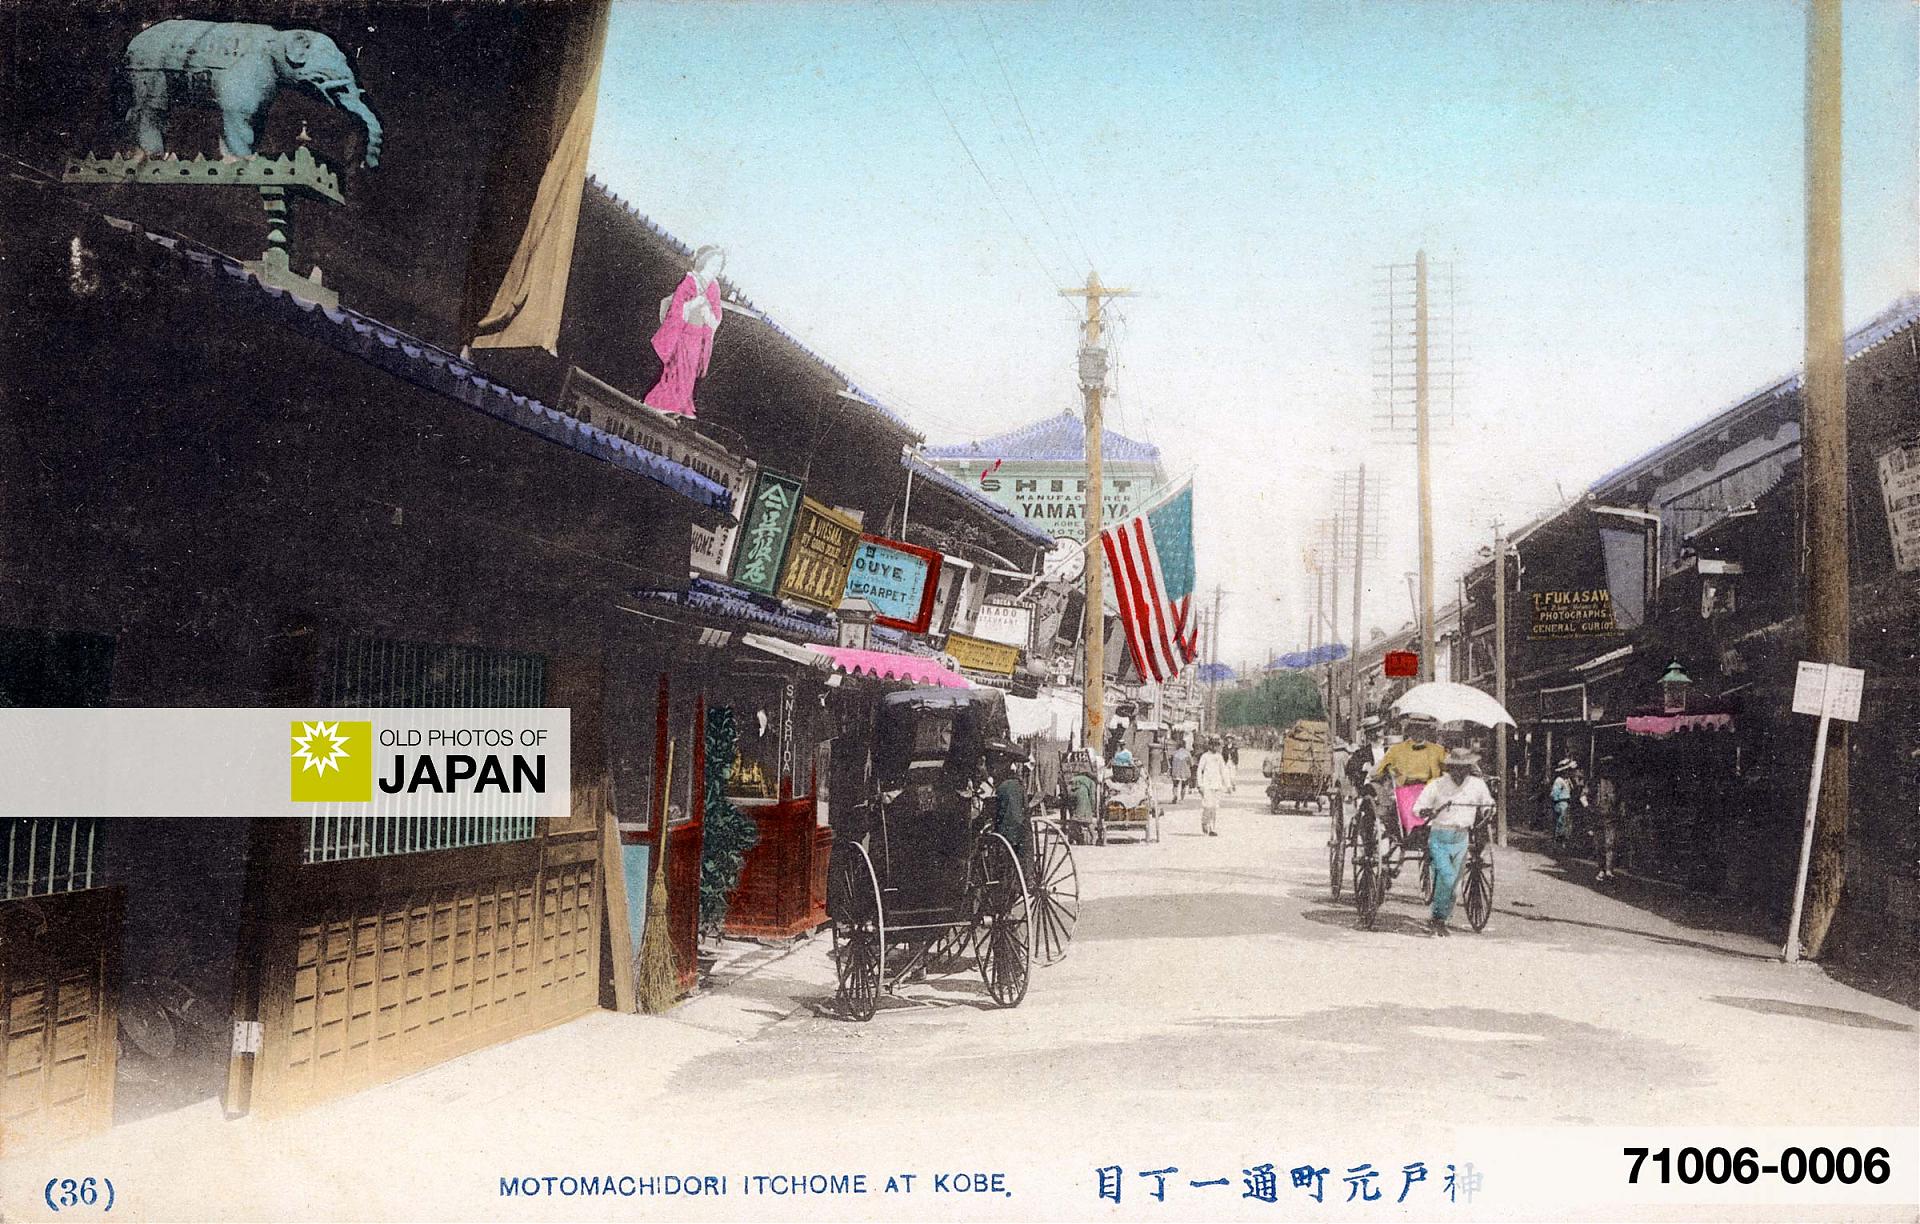 71006-0006 - Motomachi Itchome, Kobe, 1910s